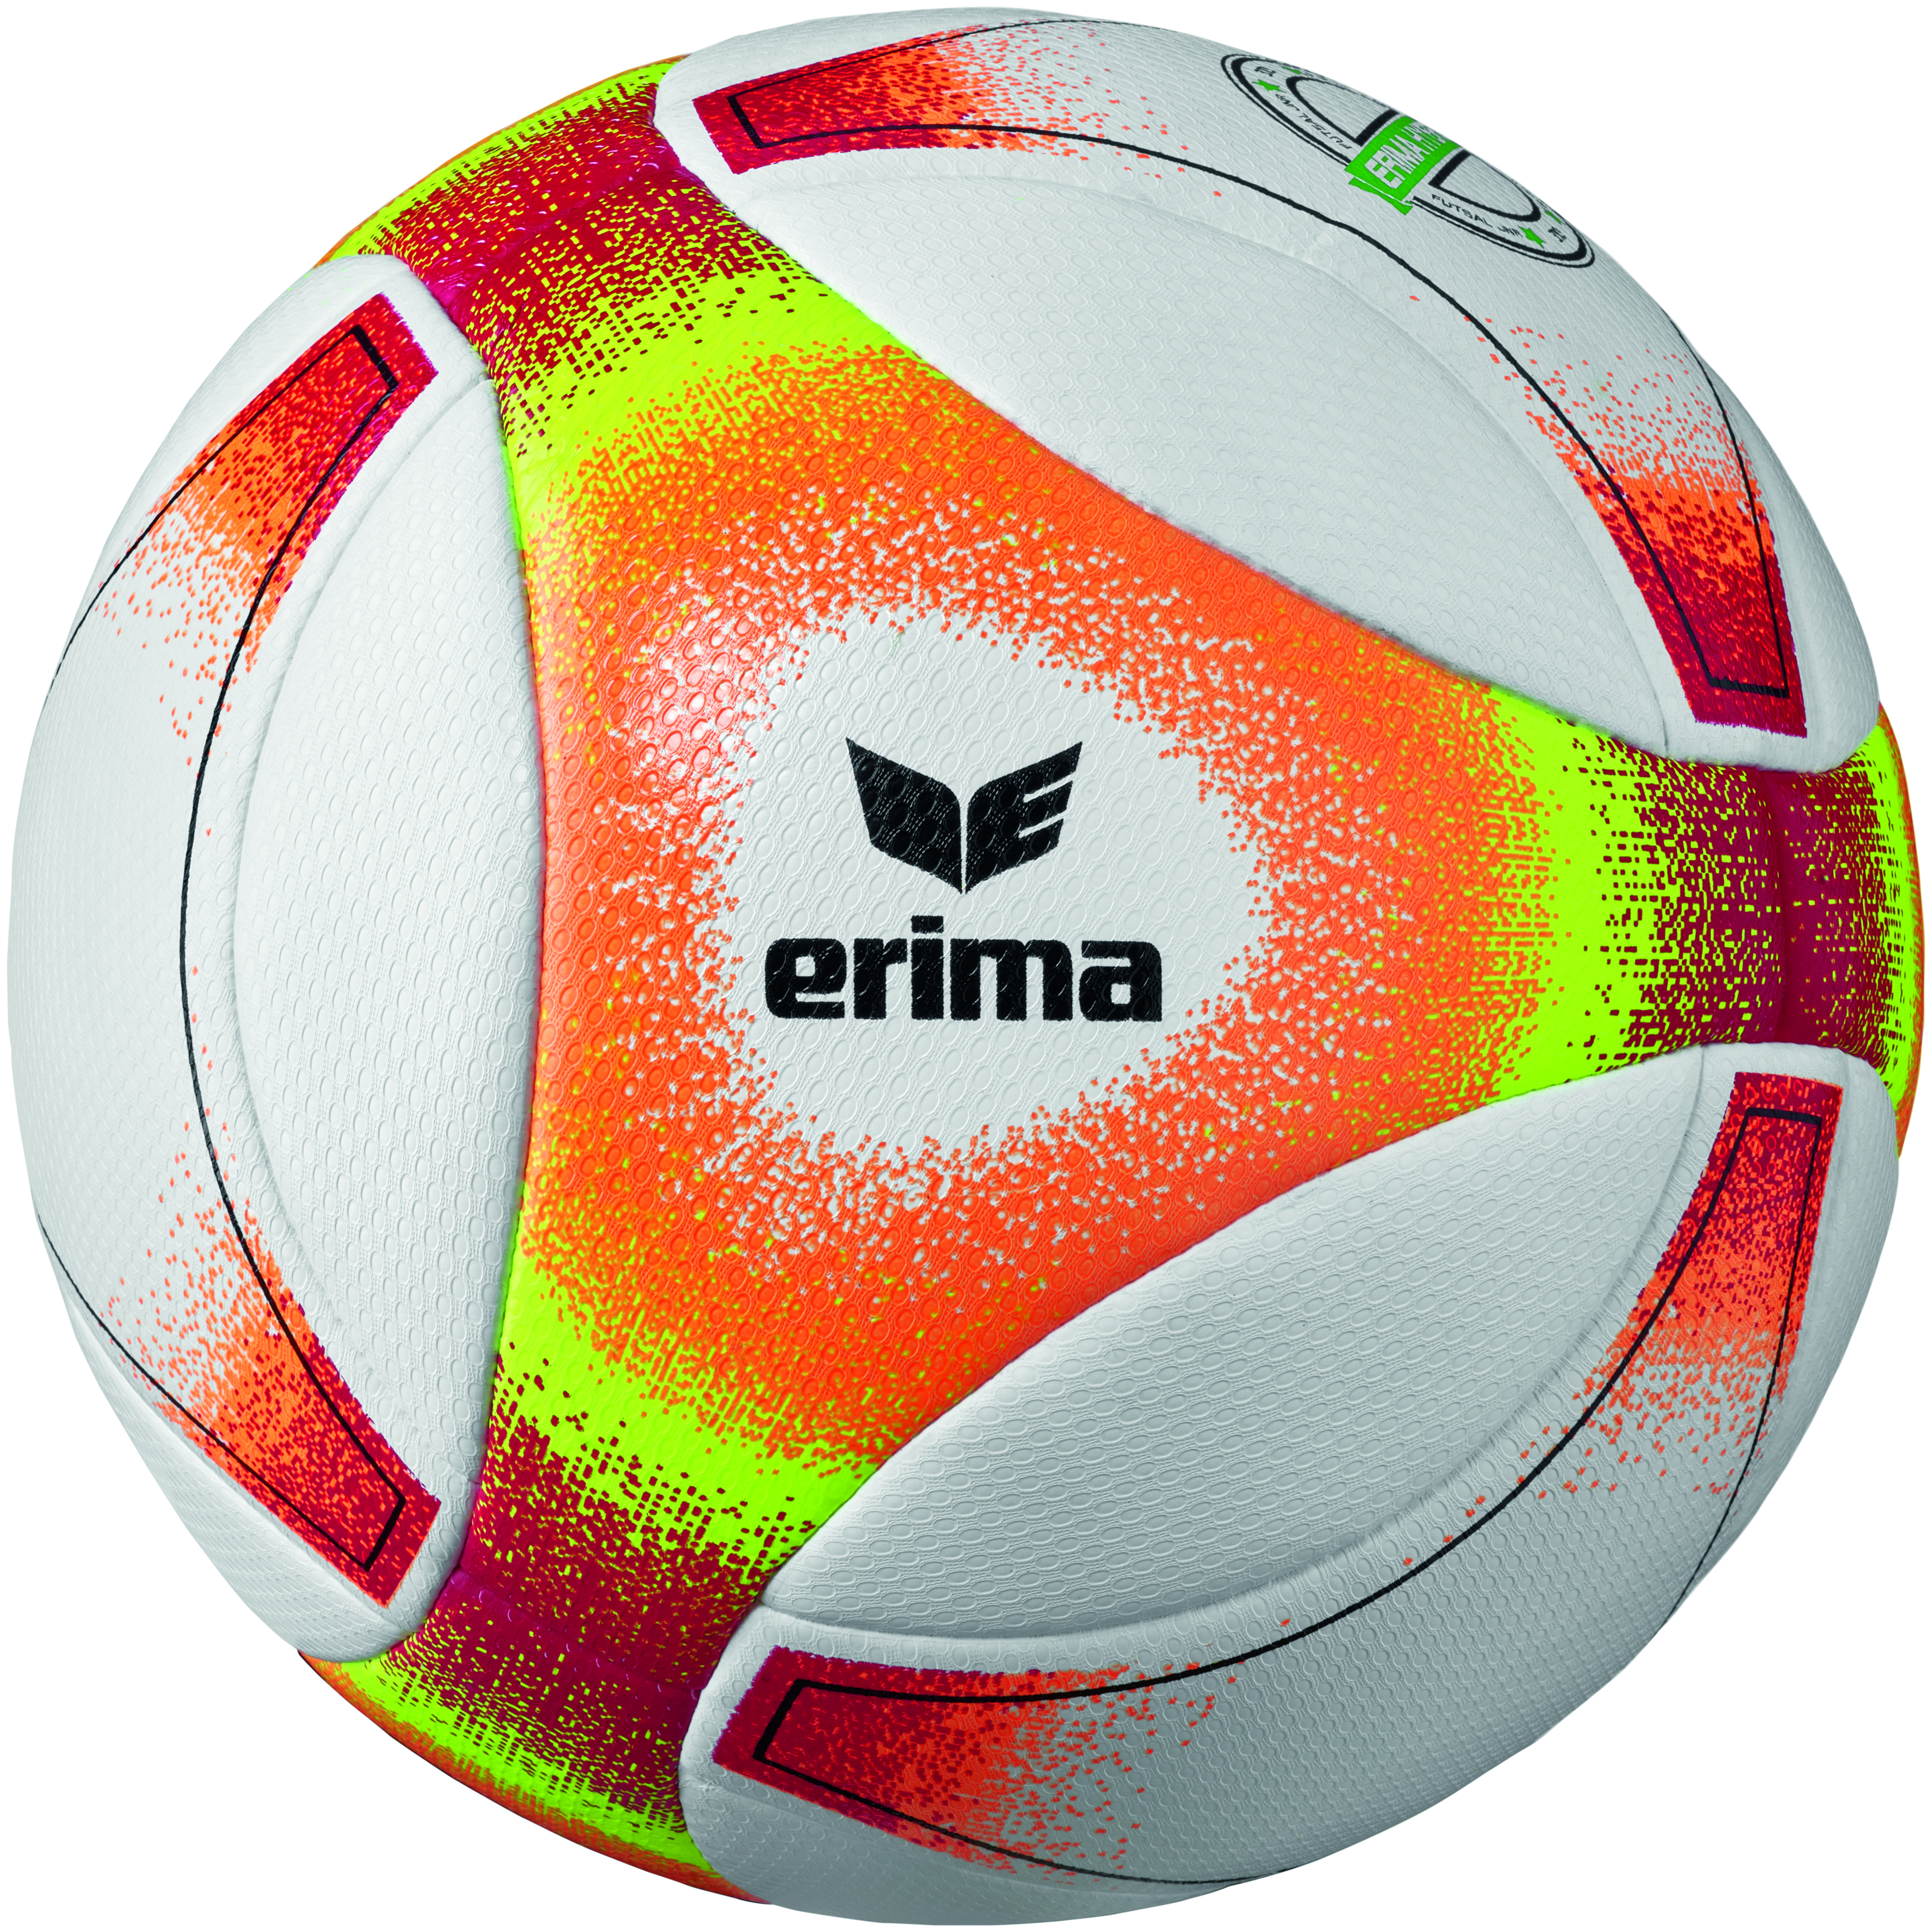 Erima Hybrid JNR 310 Futsal Gr.4 orange-safety yellow-rot